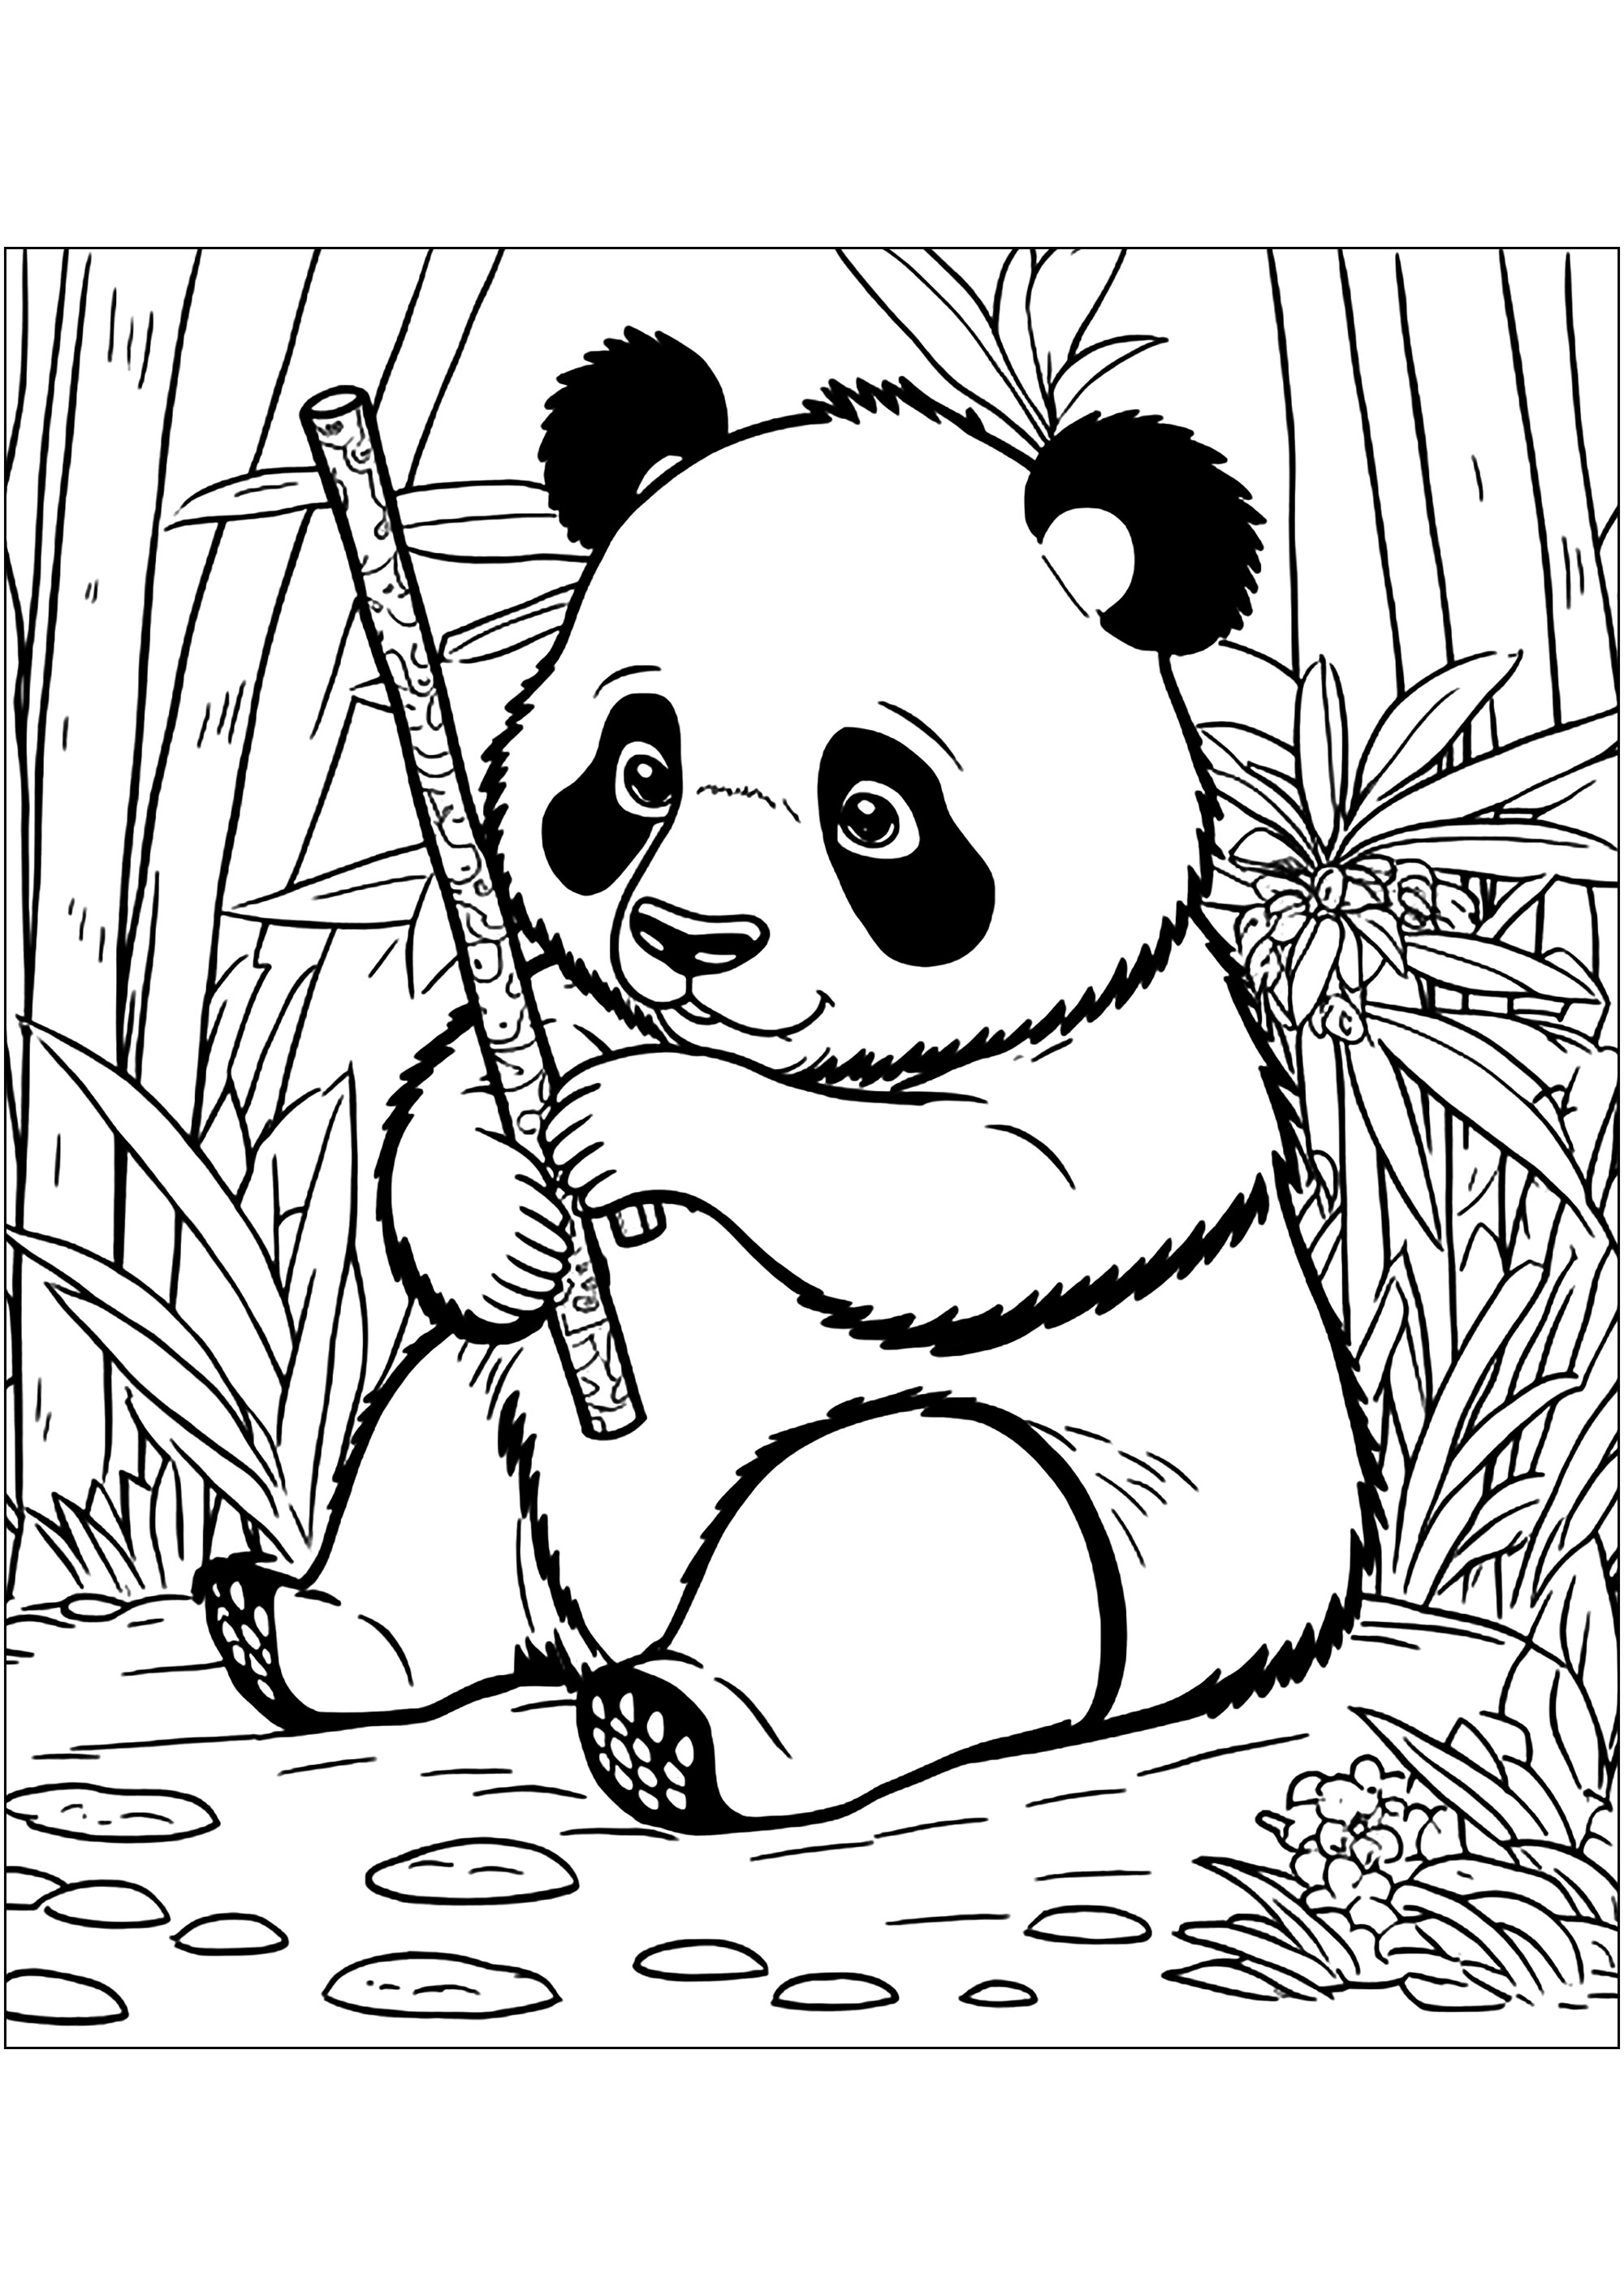 Gentil Panda en train de manger du bambou